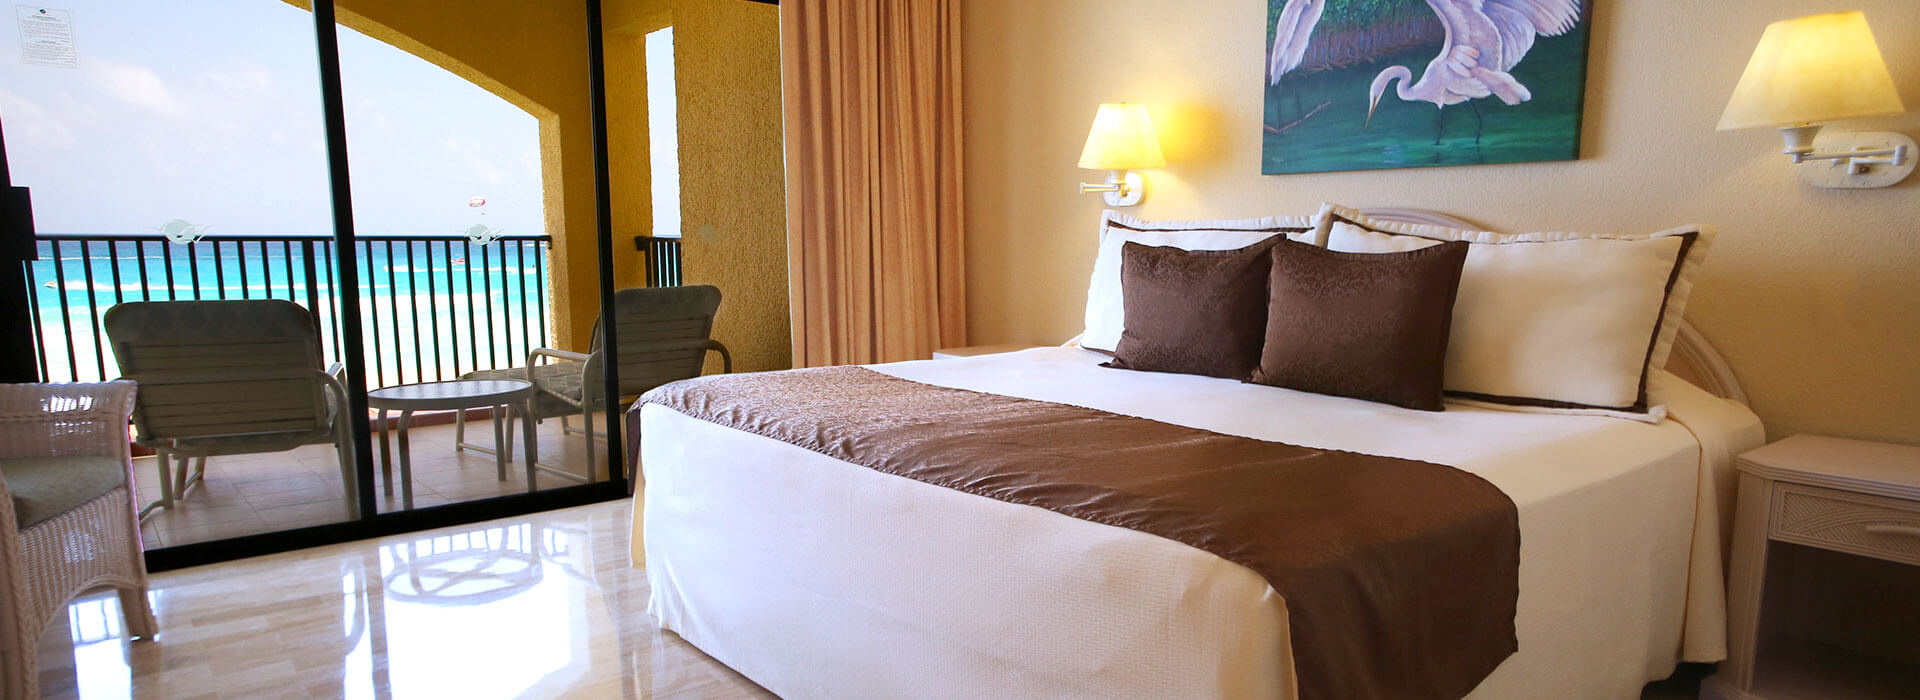 Cancun beachfront suites in resort
